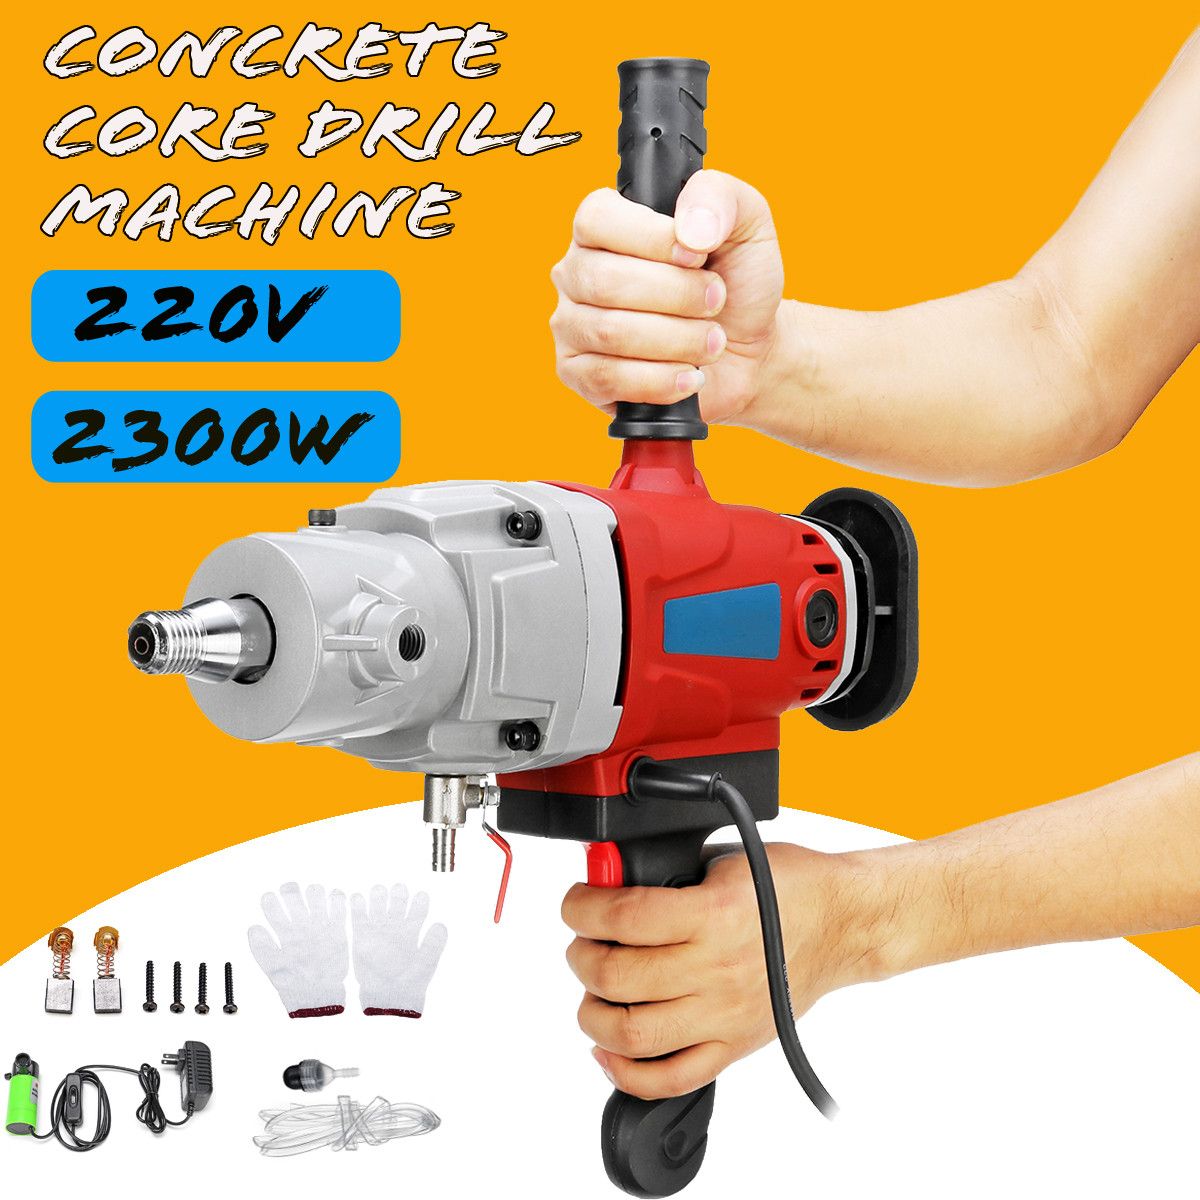 2300W-Core-Drill-Stepless-Speed-Concrete-Diamond-Core-Drill-Wet-Handheld-Concrete-Core-Drilling-Mach-1404050